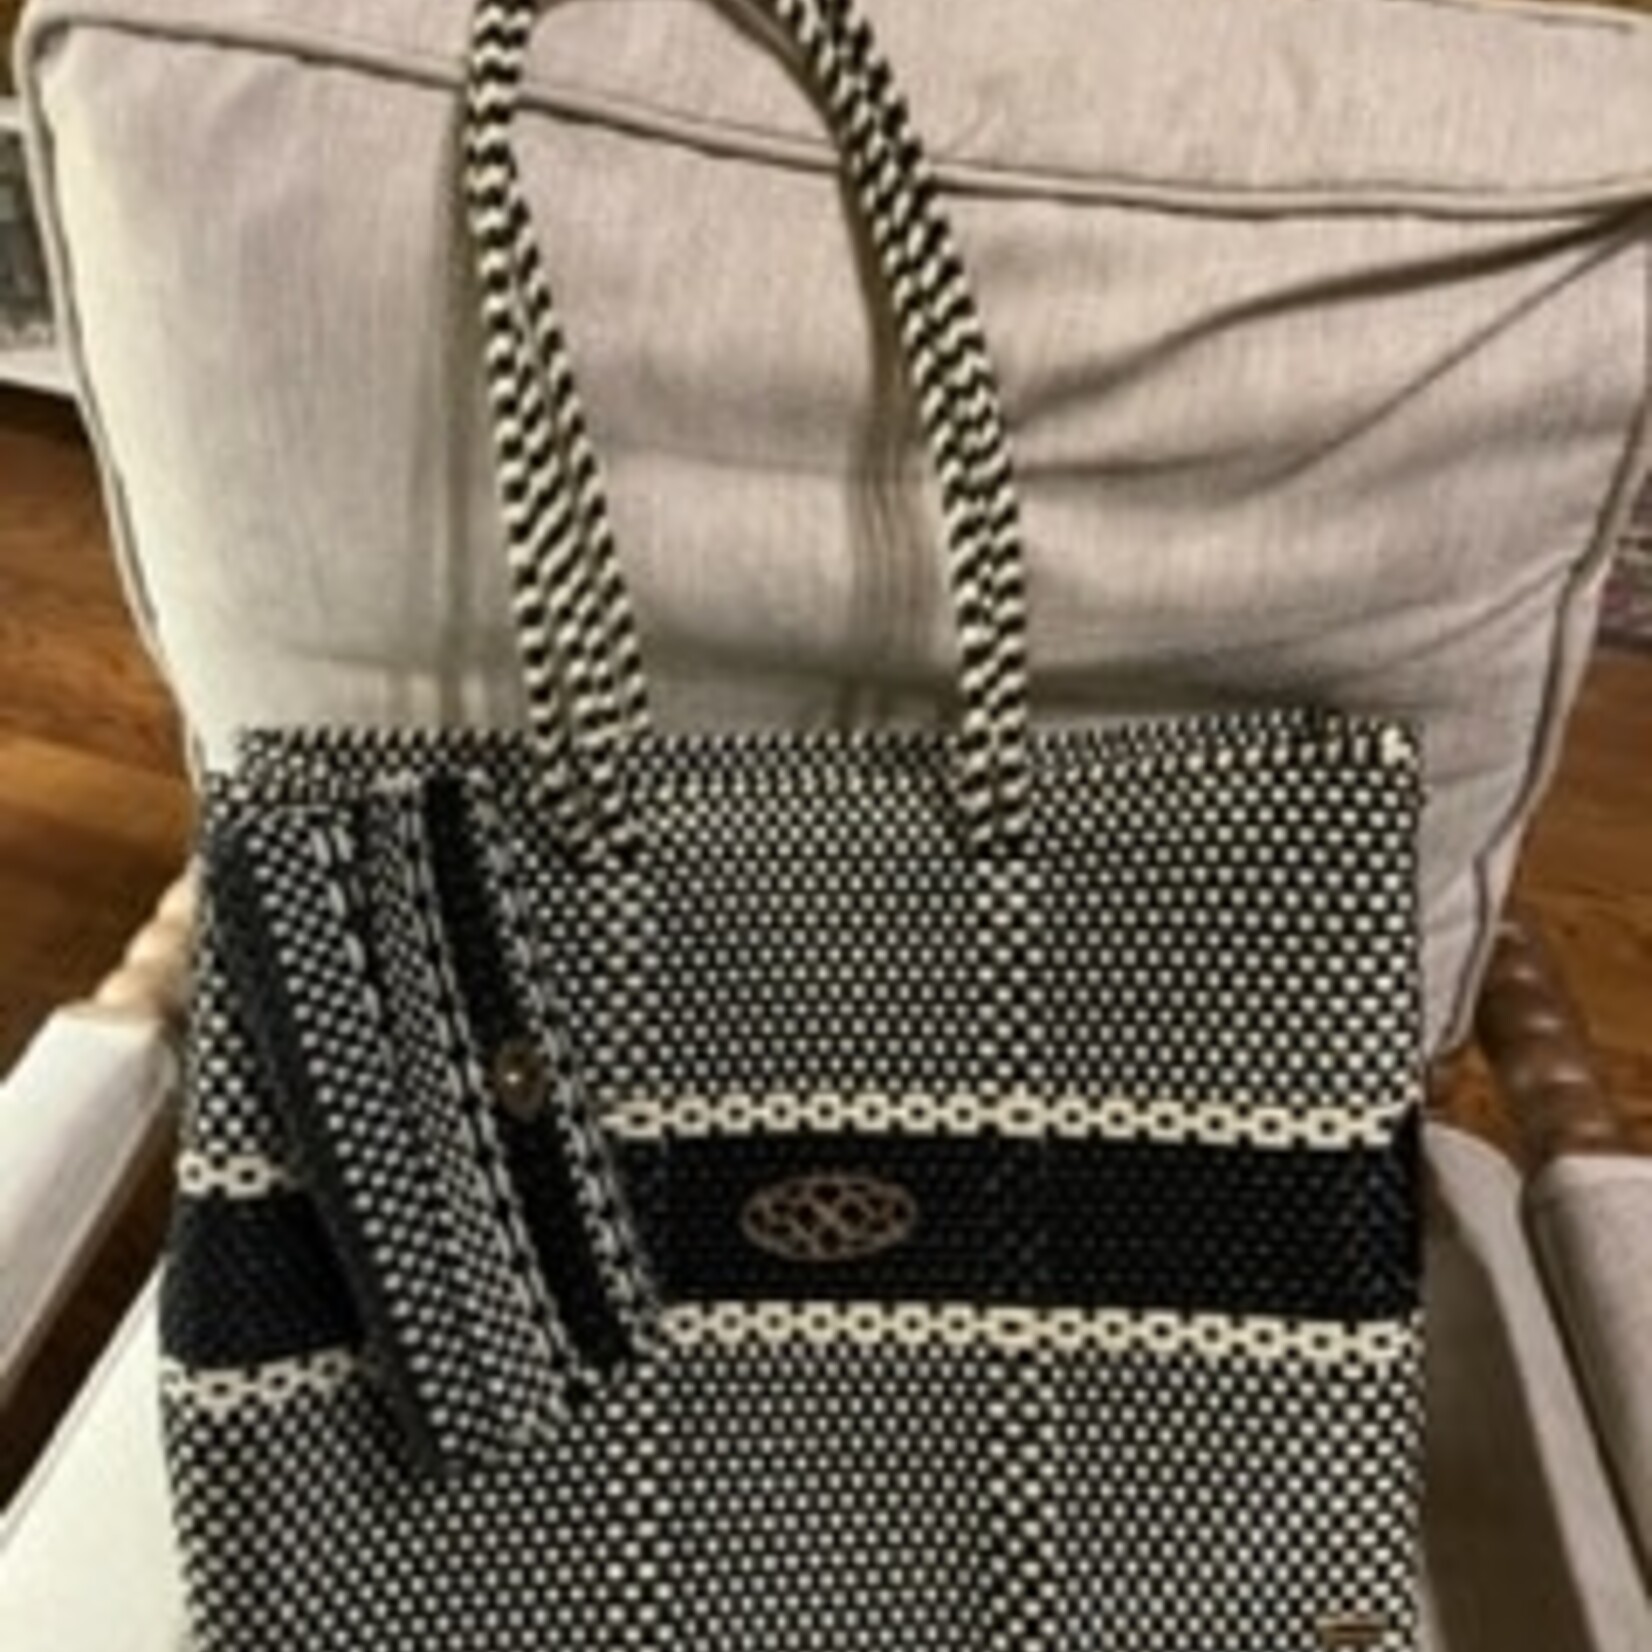 Lola's Bag LOLA'S OAXACA TRAVEL TOTE BAG WITH CLUTCH BAG